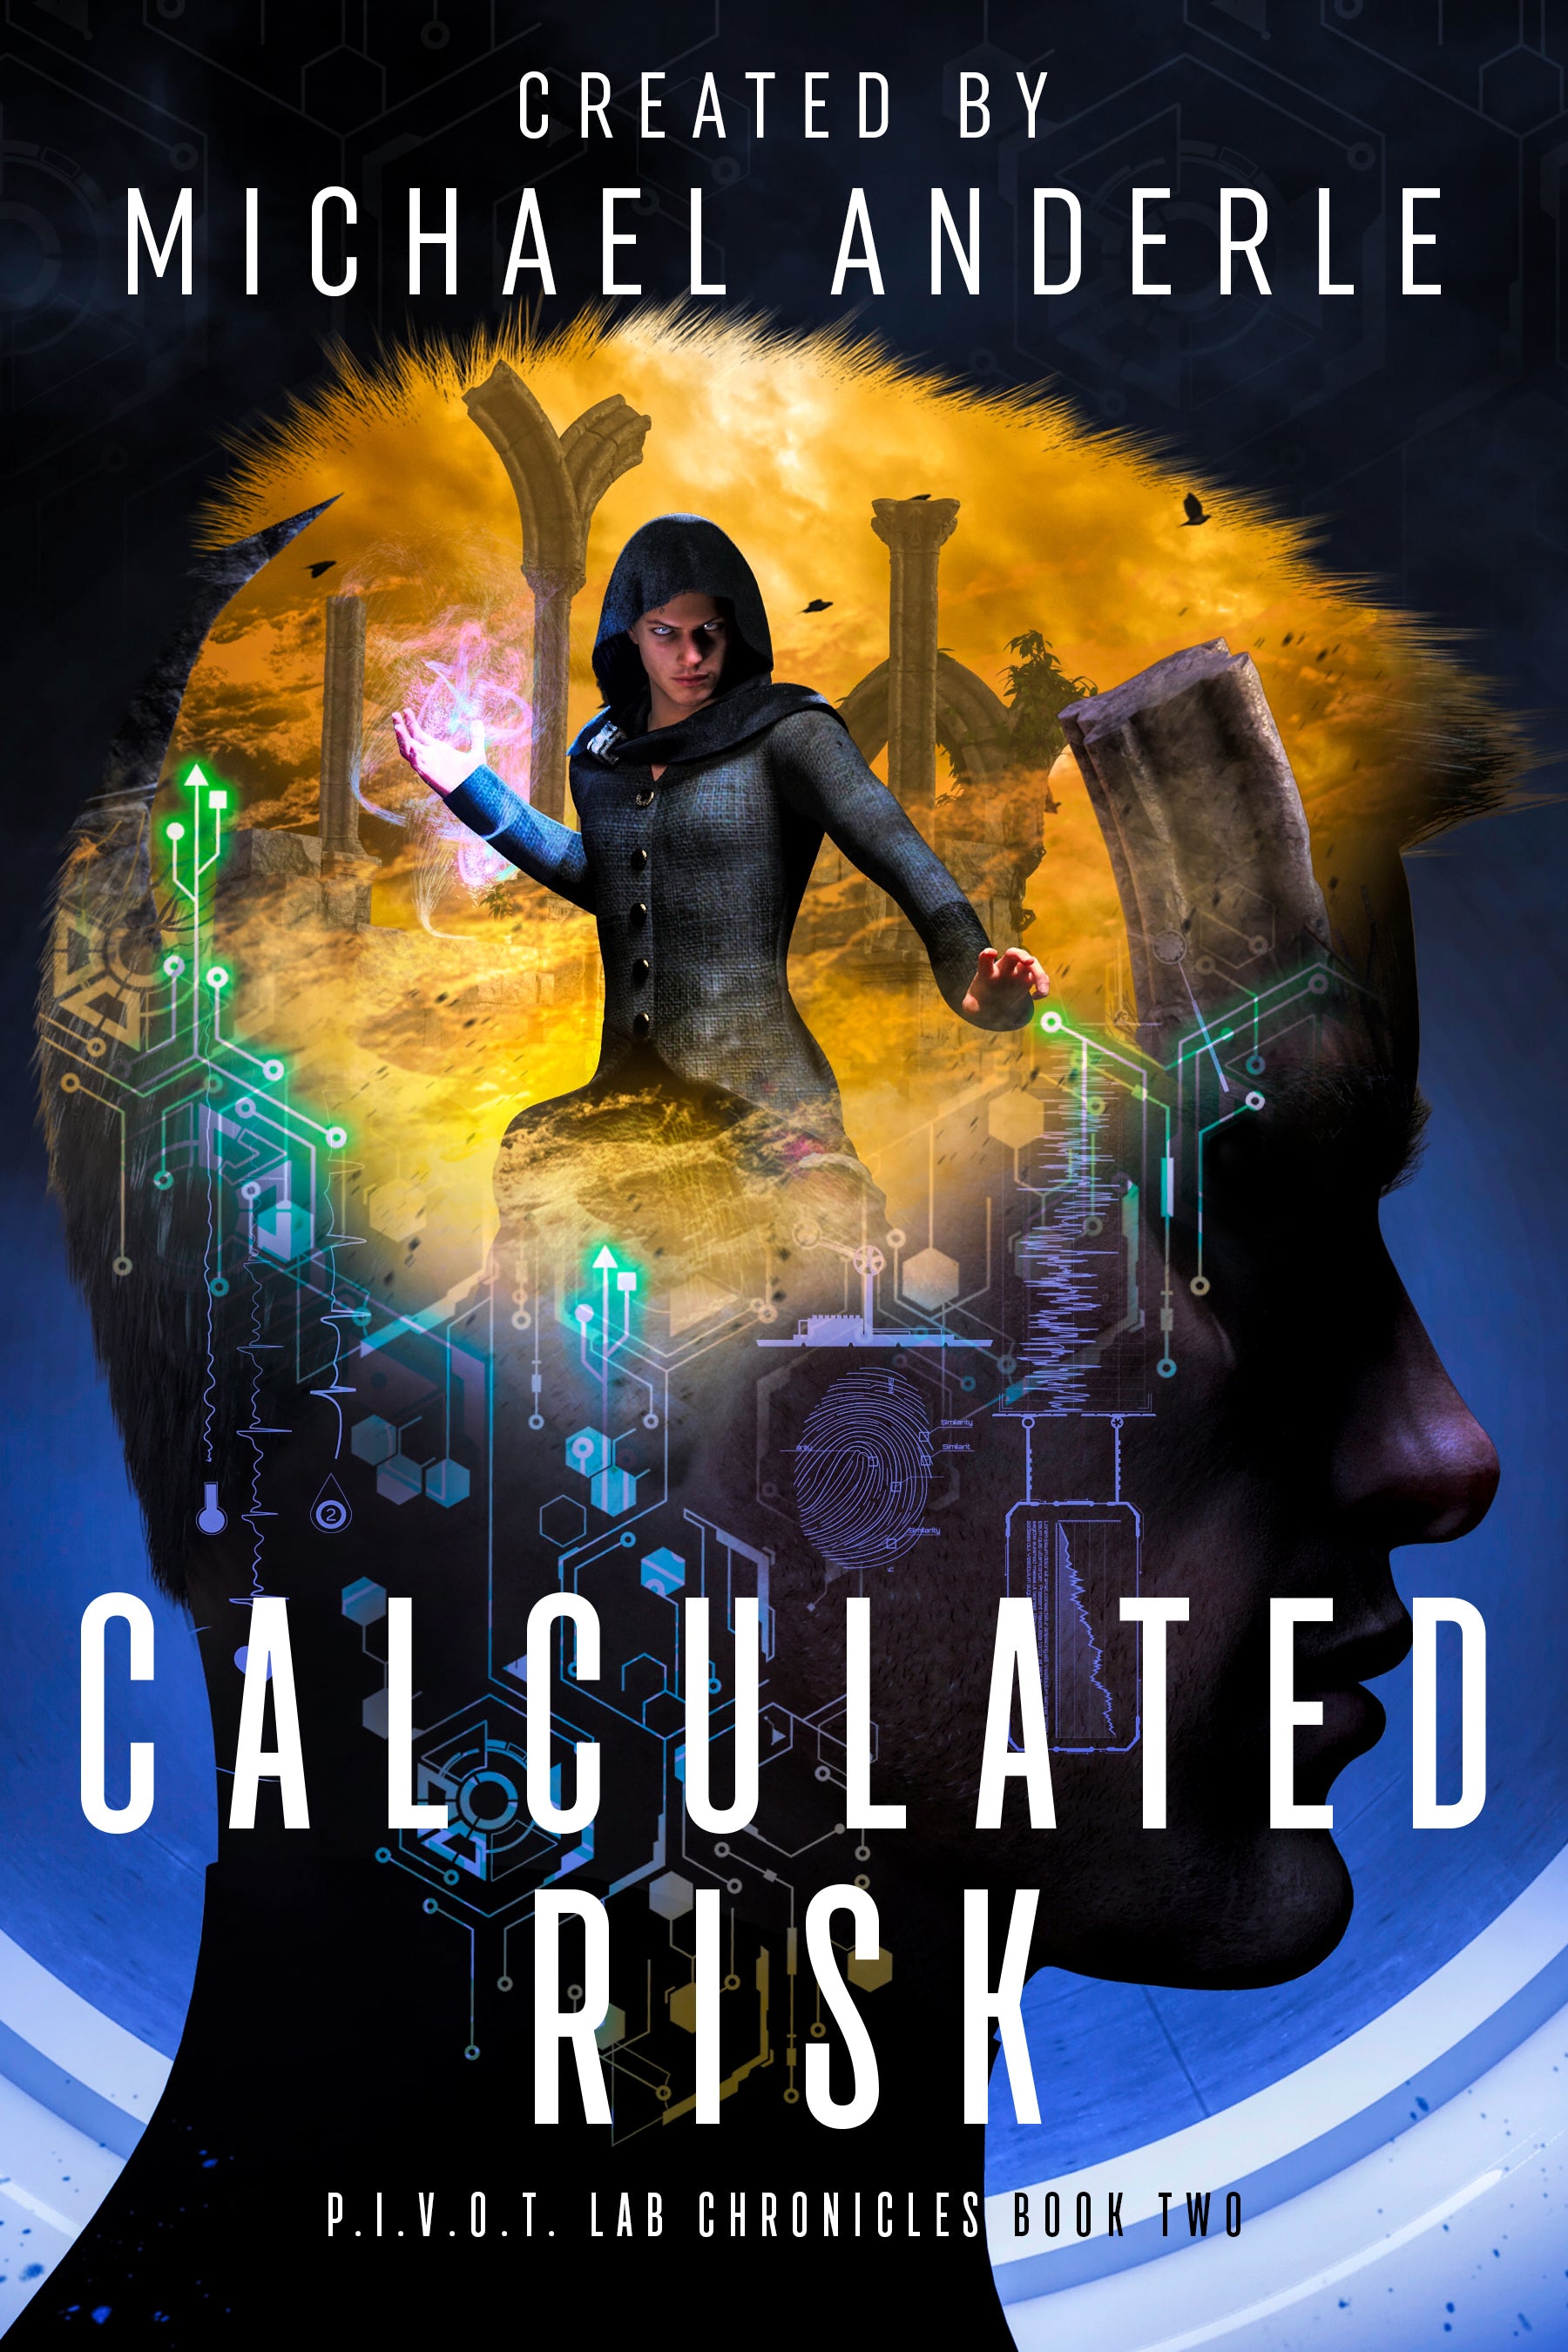 Book 2: Calculated Risk